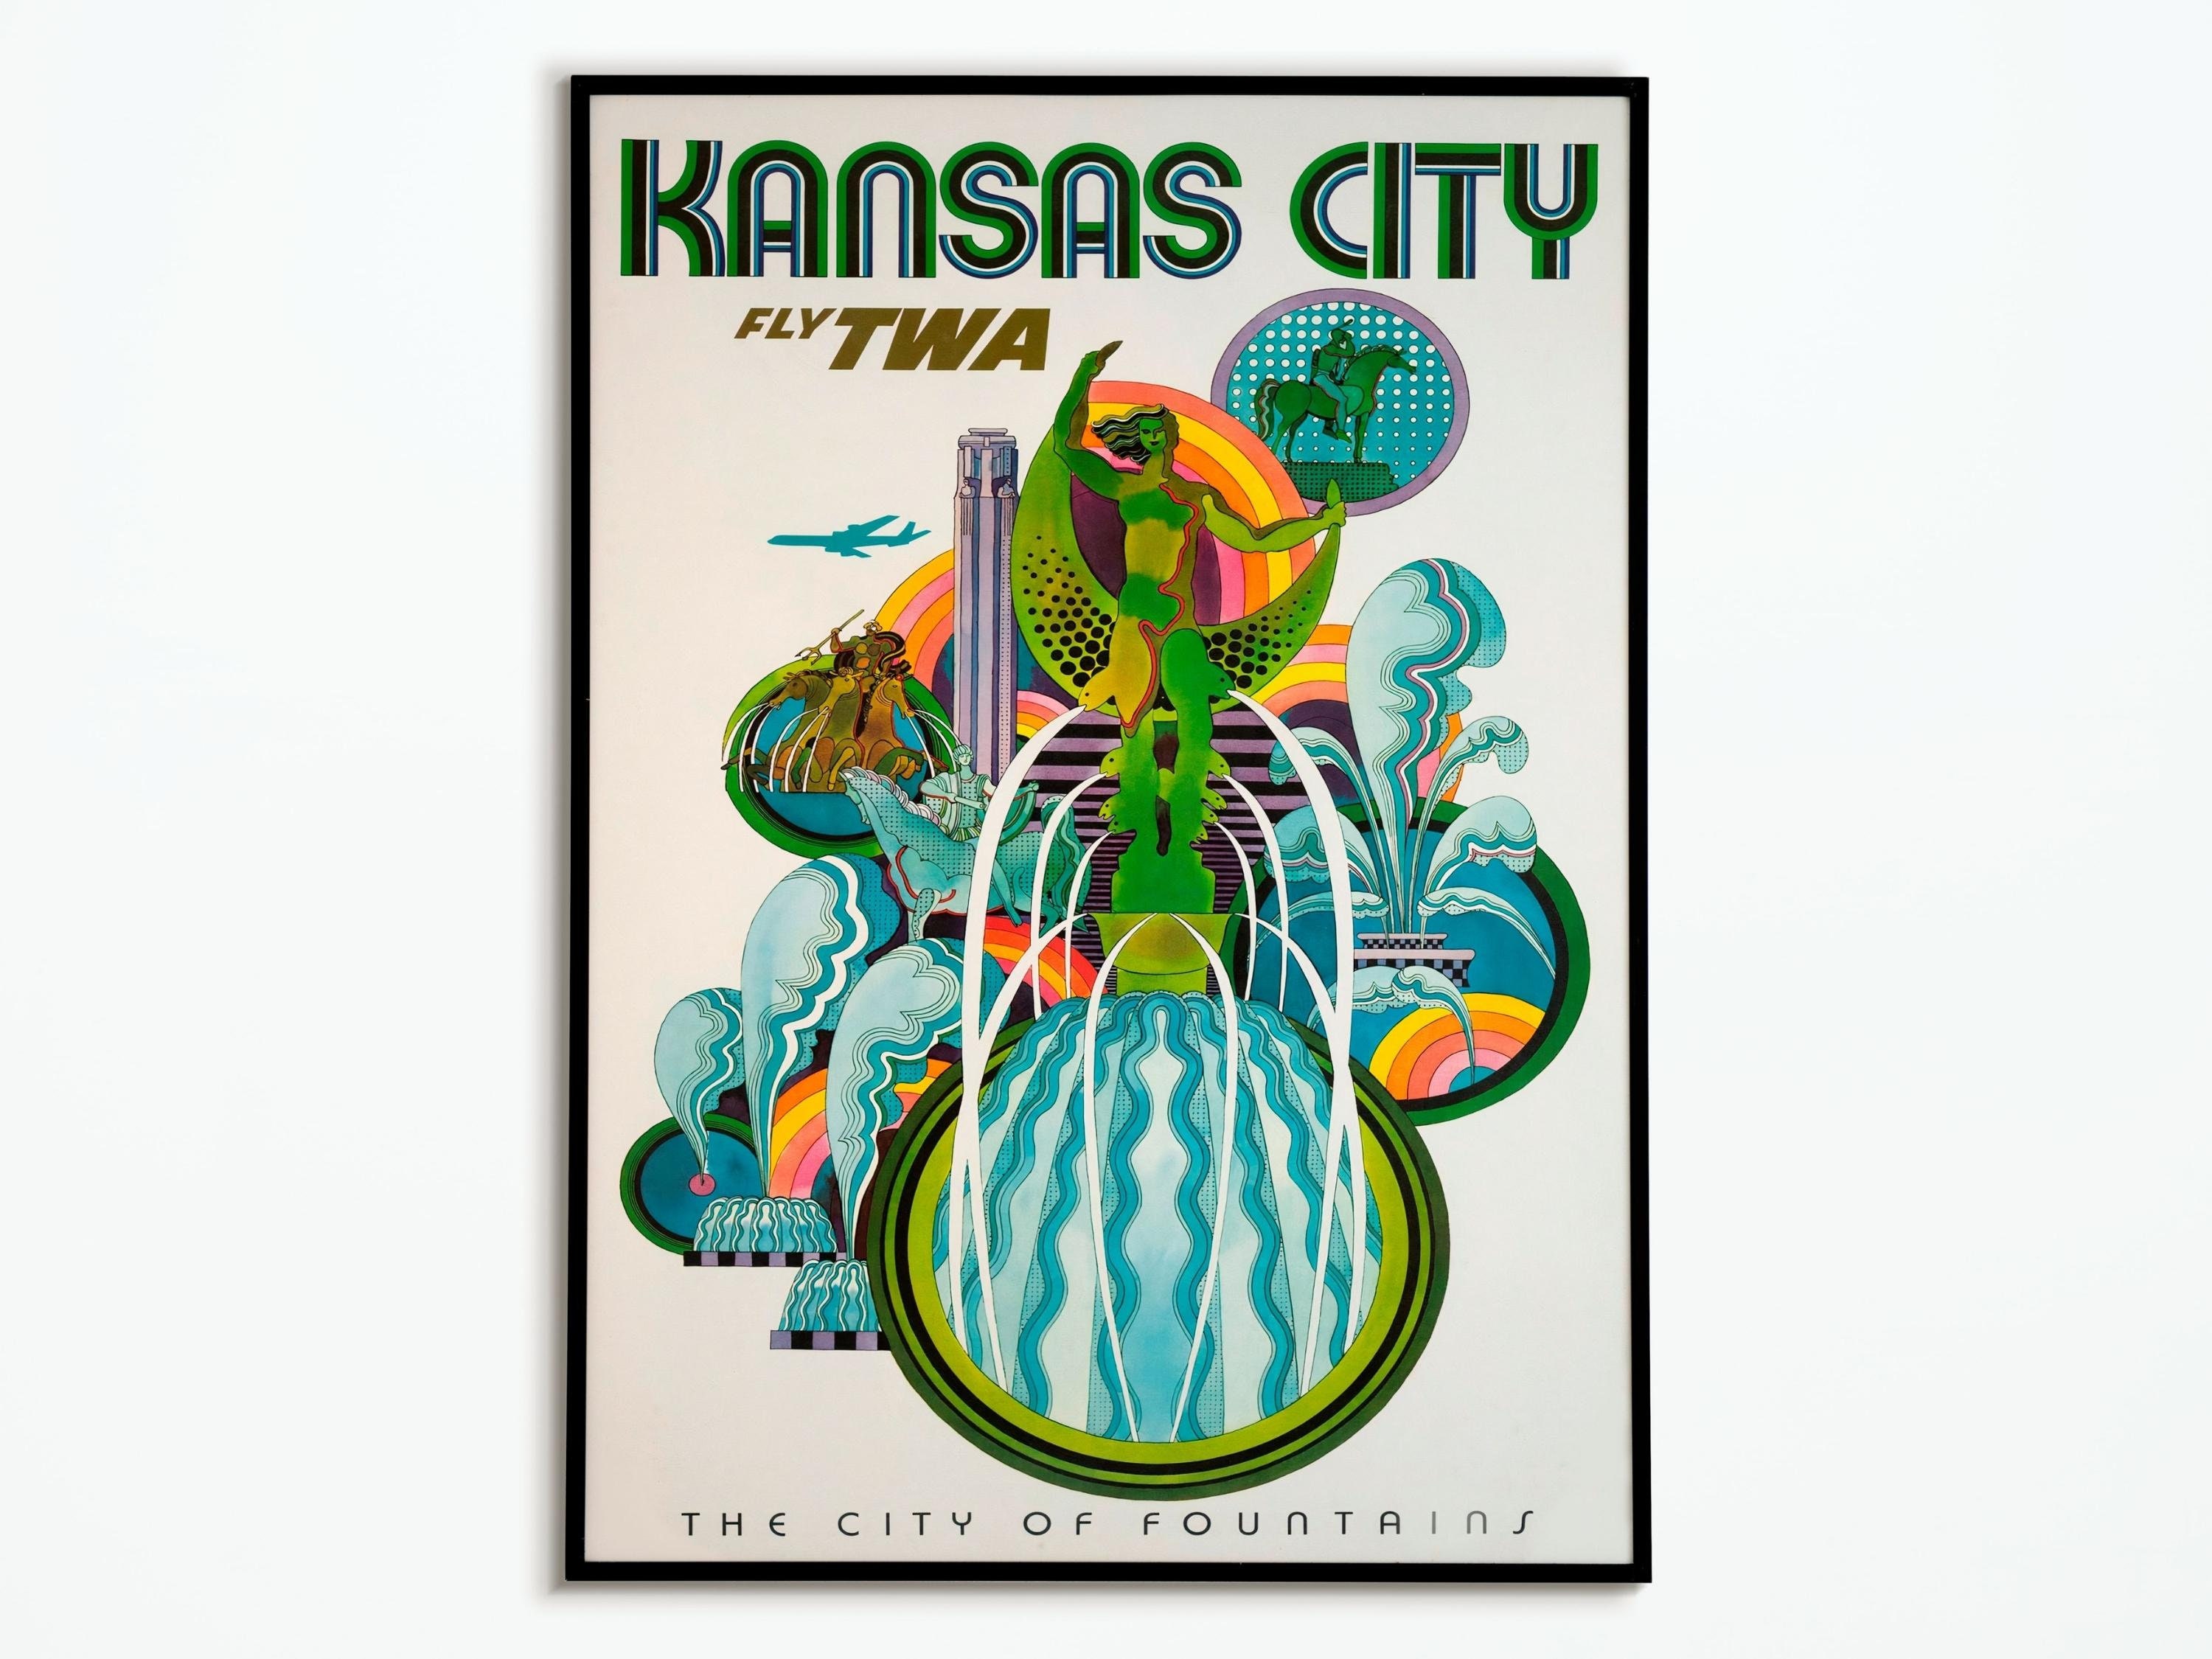 1924 Champions - Kansas City Monarchs - Unisex T-Shirt, Navy / Adult S / T-Shirt